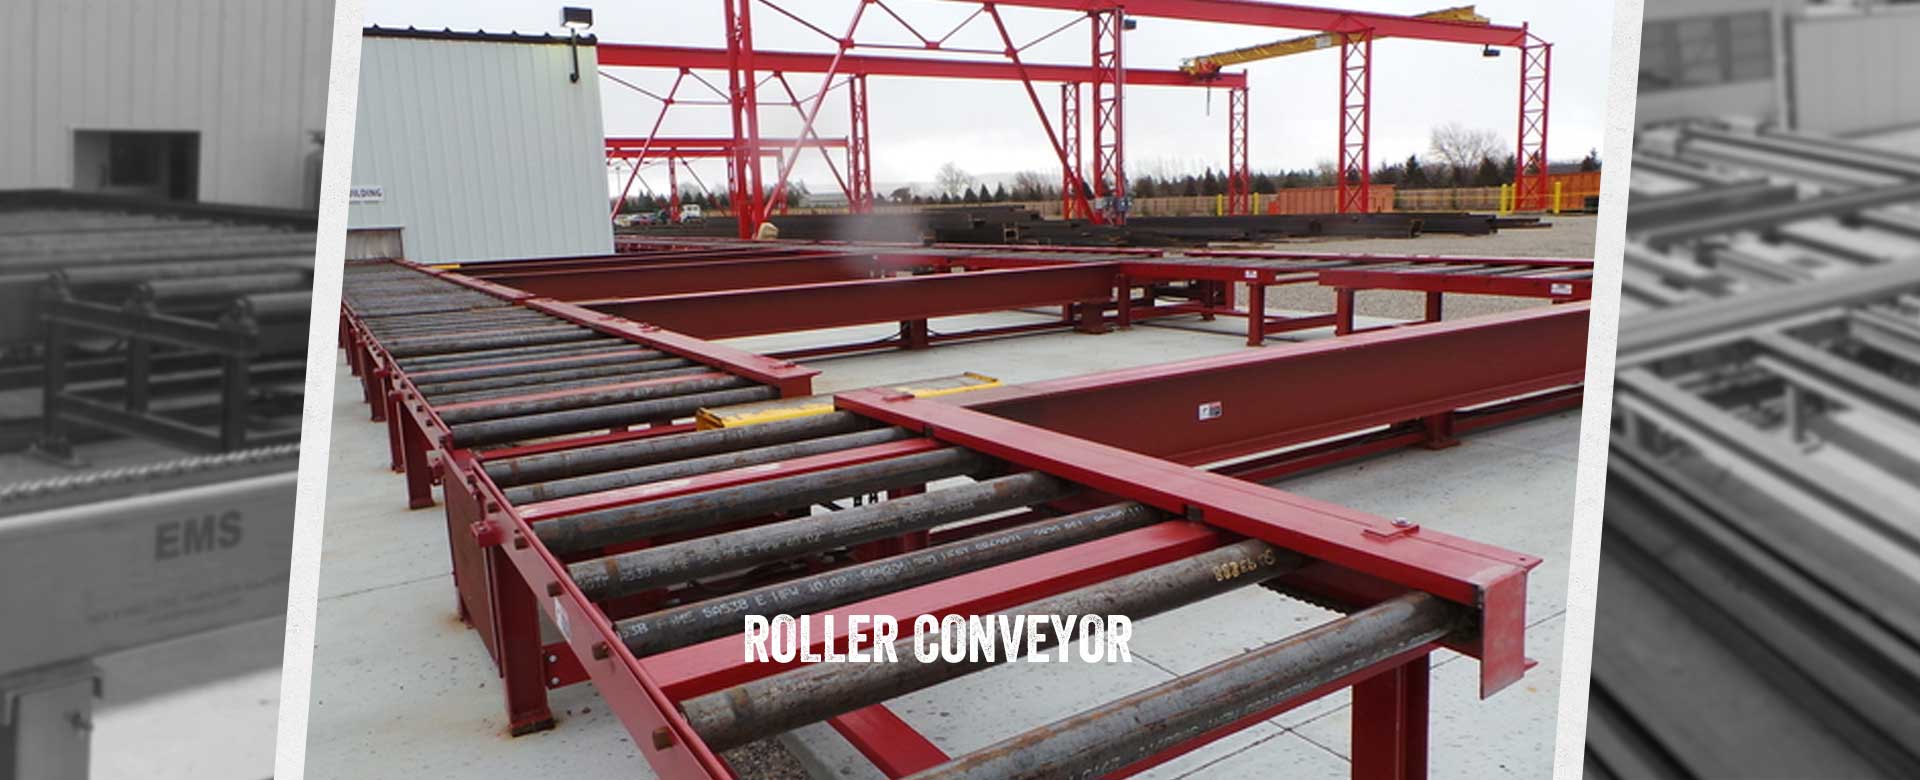 EMS roller conveyor.